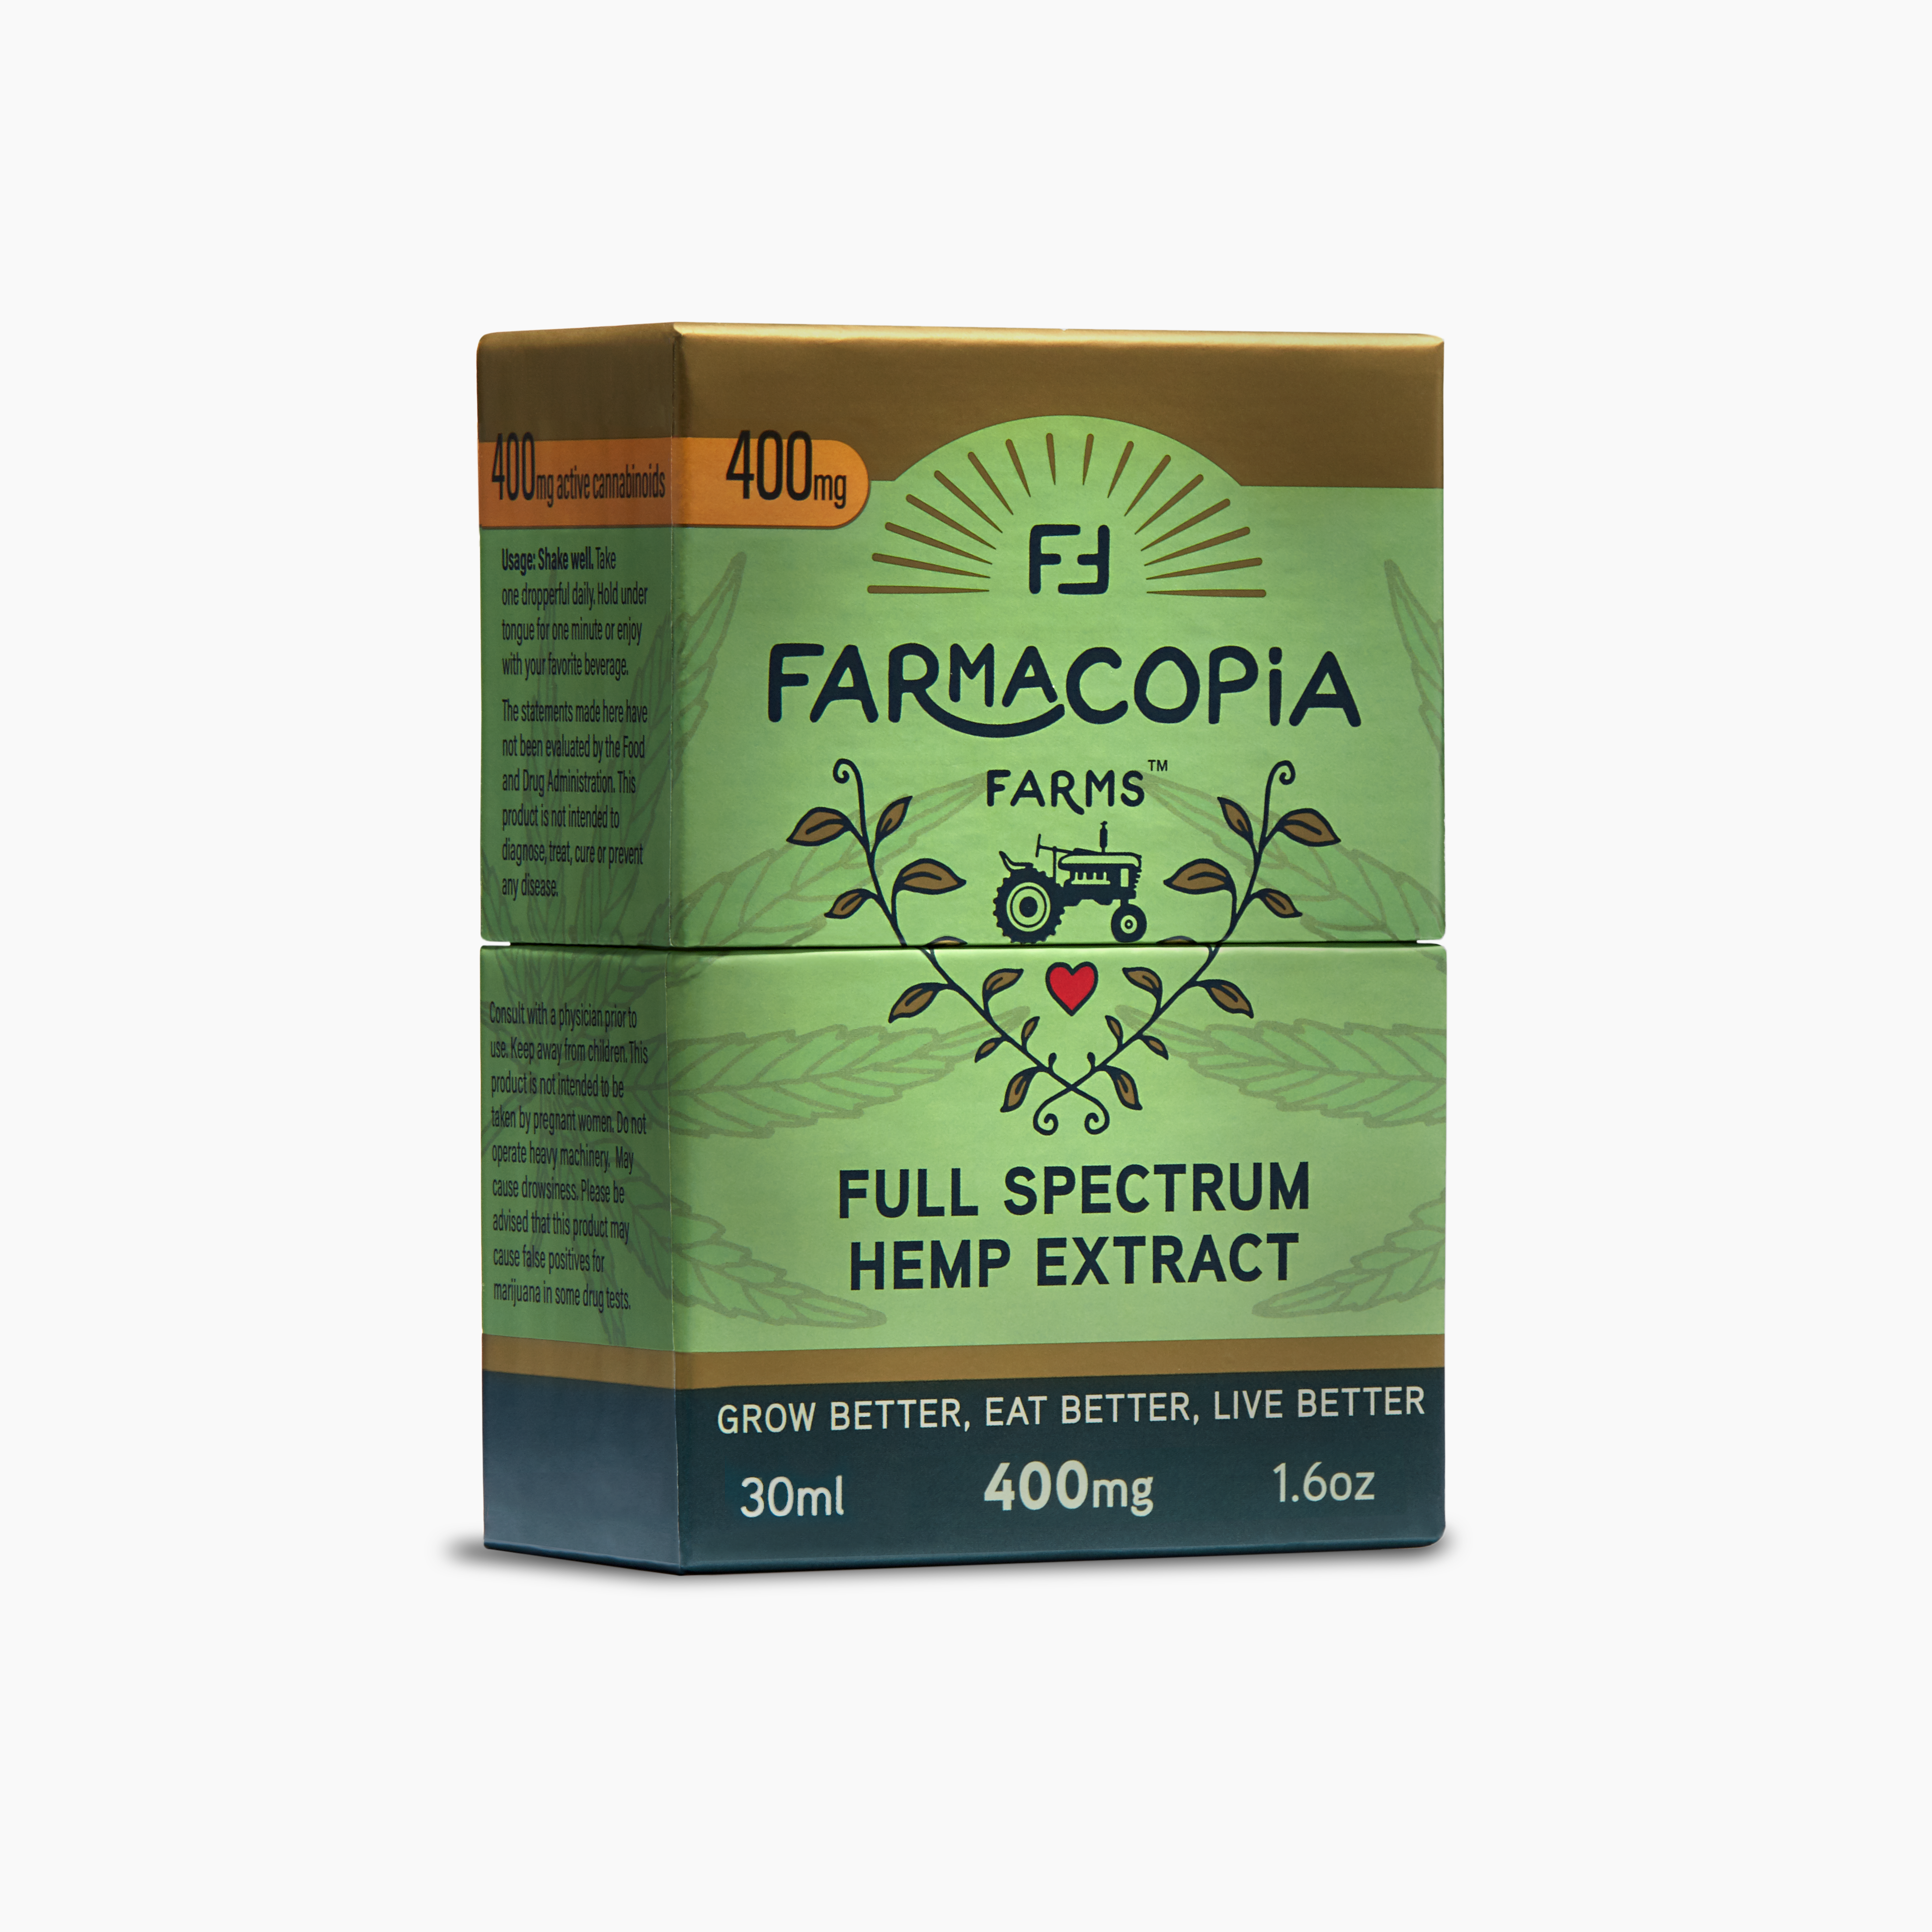 Farmacopia Farms Full Spectrum Hemp Extract, 400mg